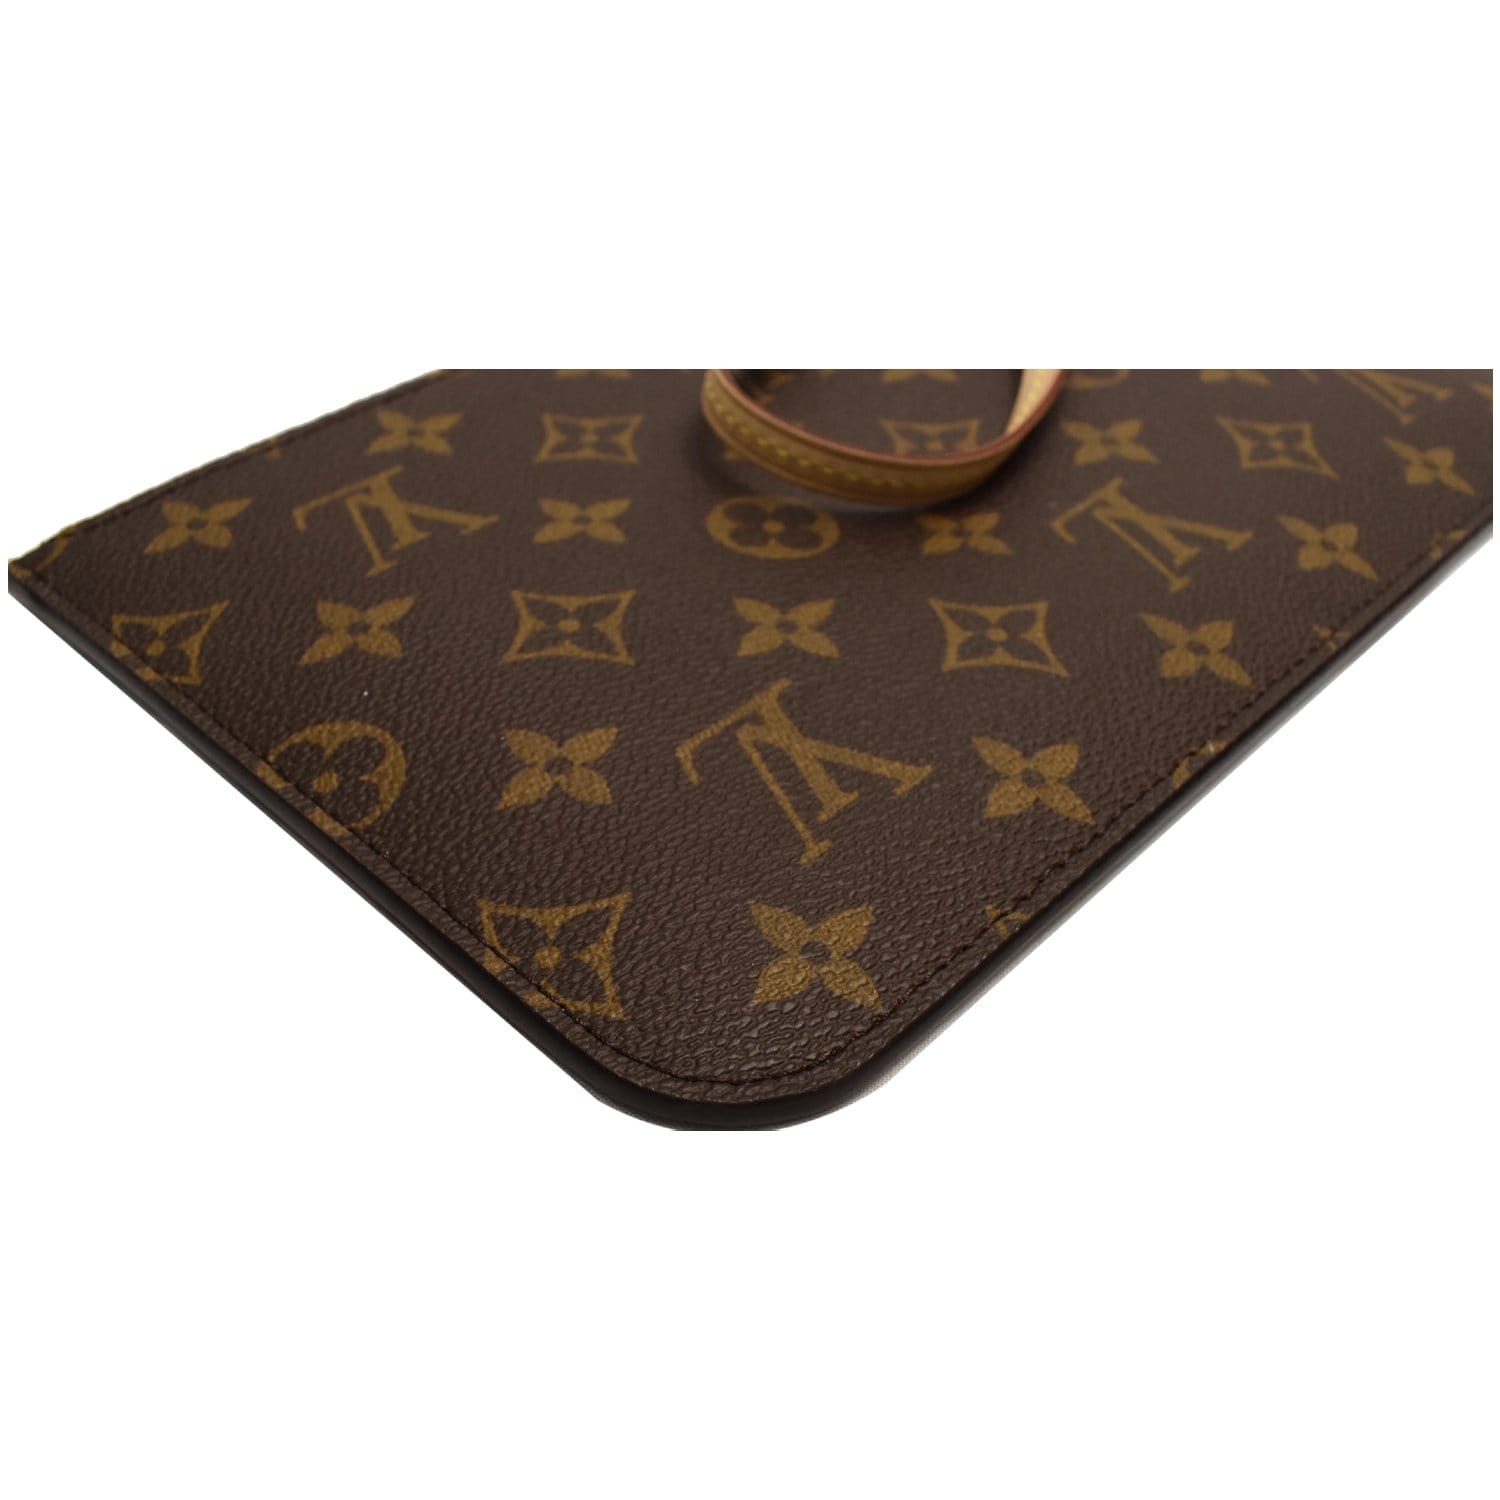 Louis Vuitton Pochette To-Go Bag Monogram Canvas In Brown - Praise